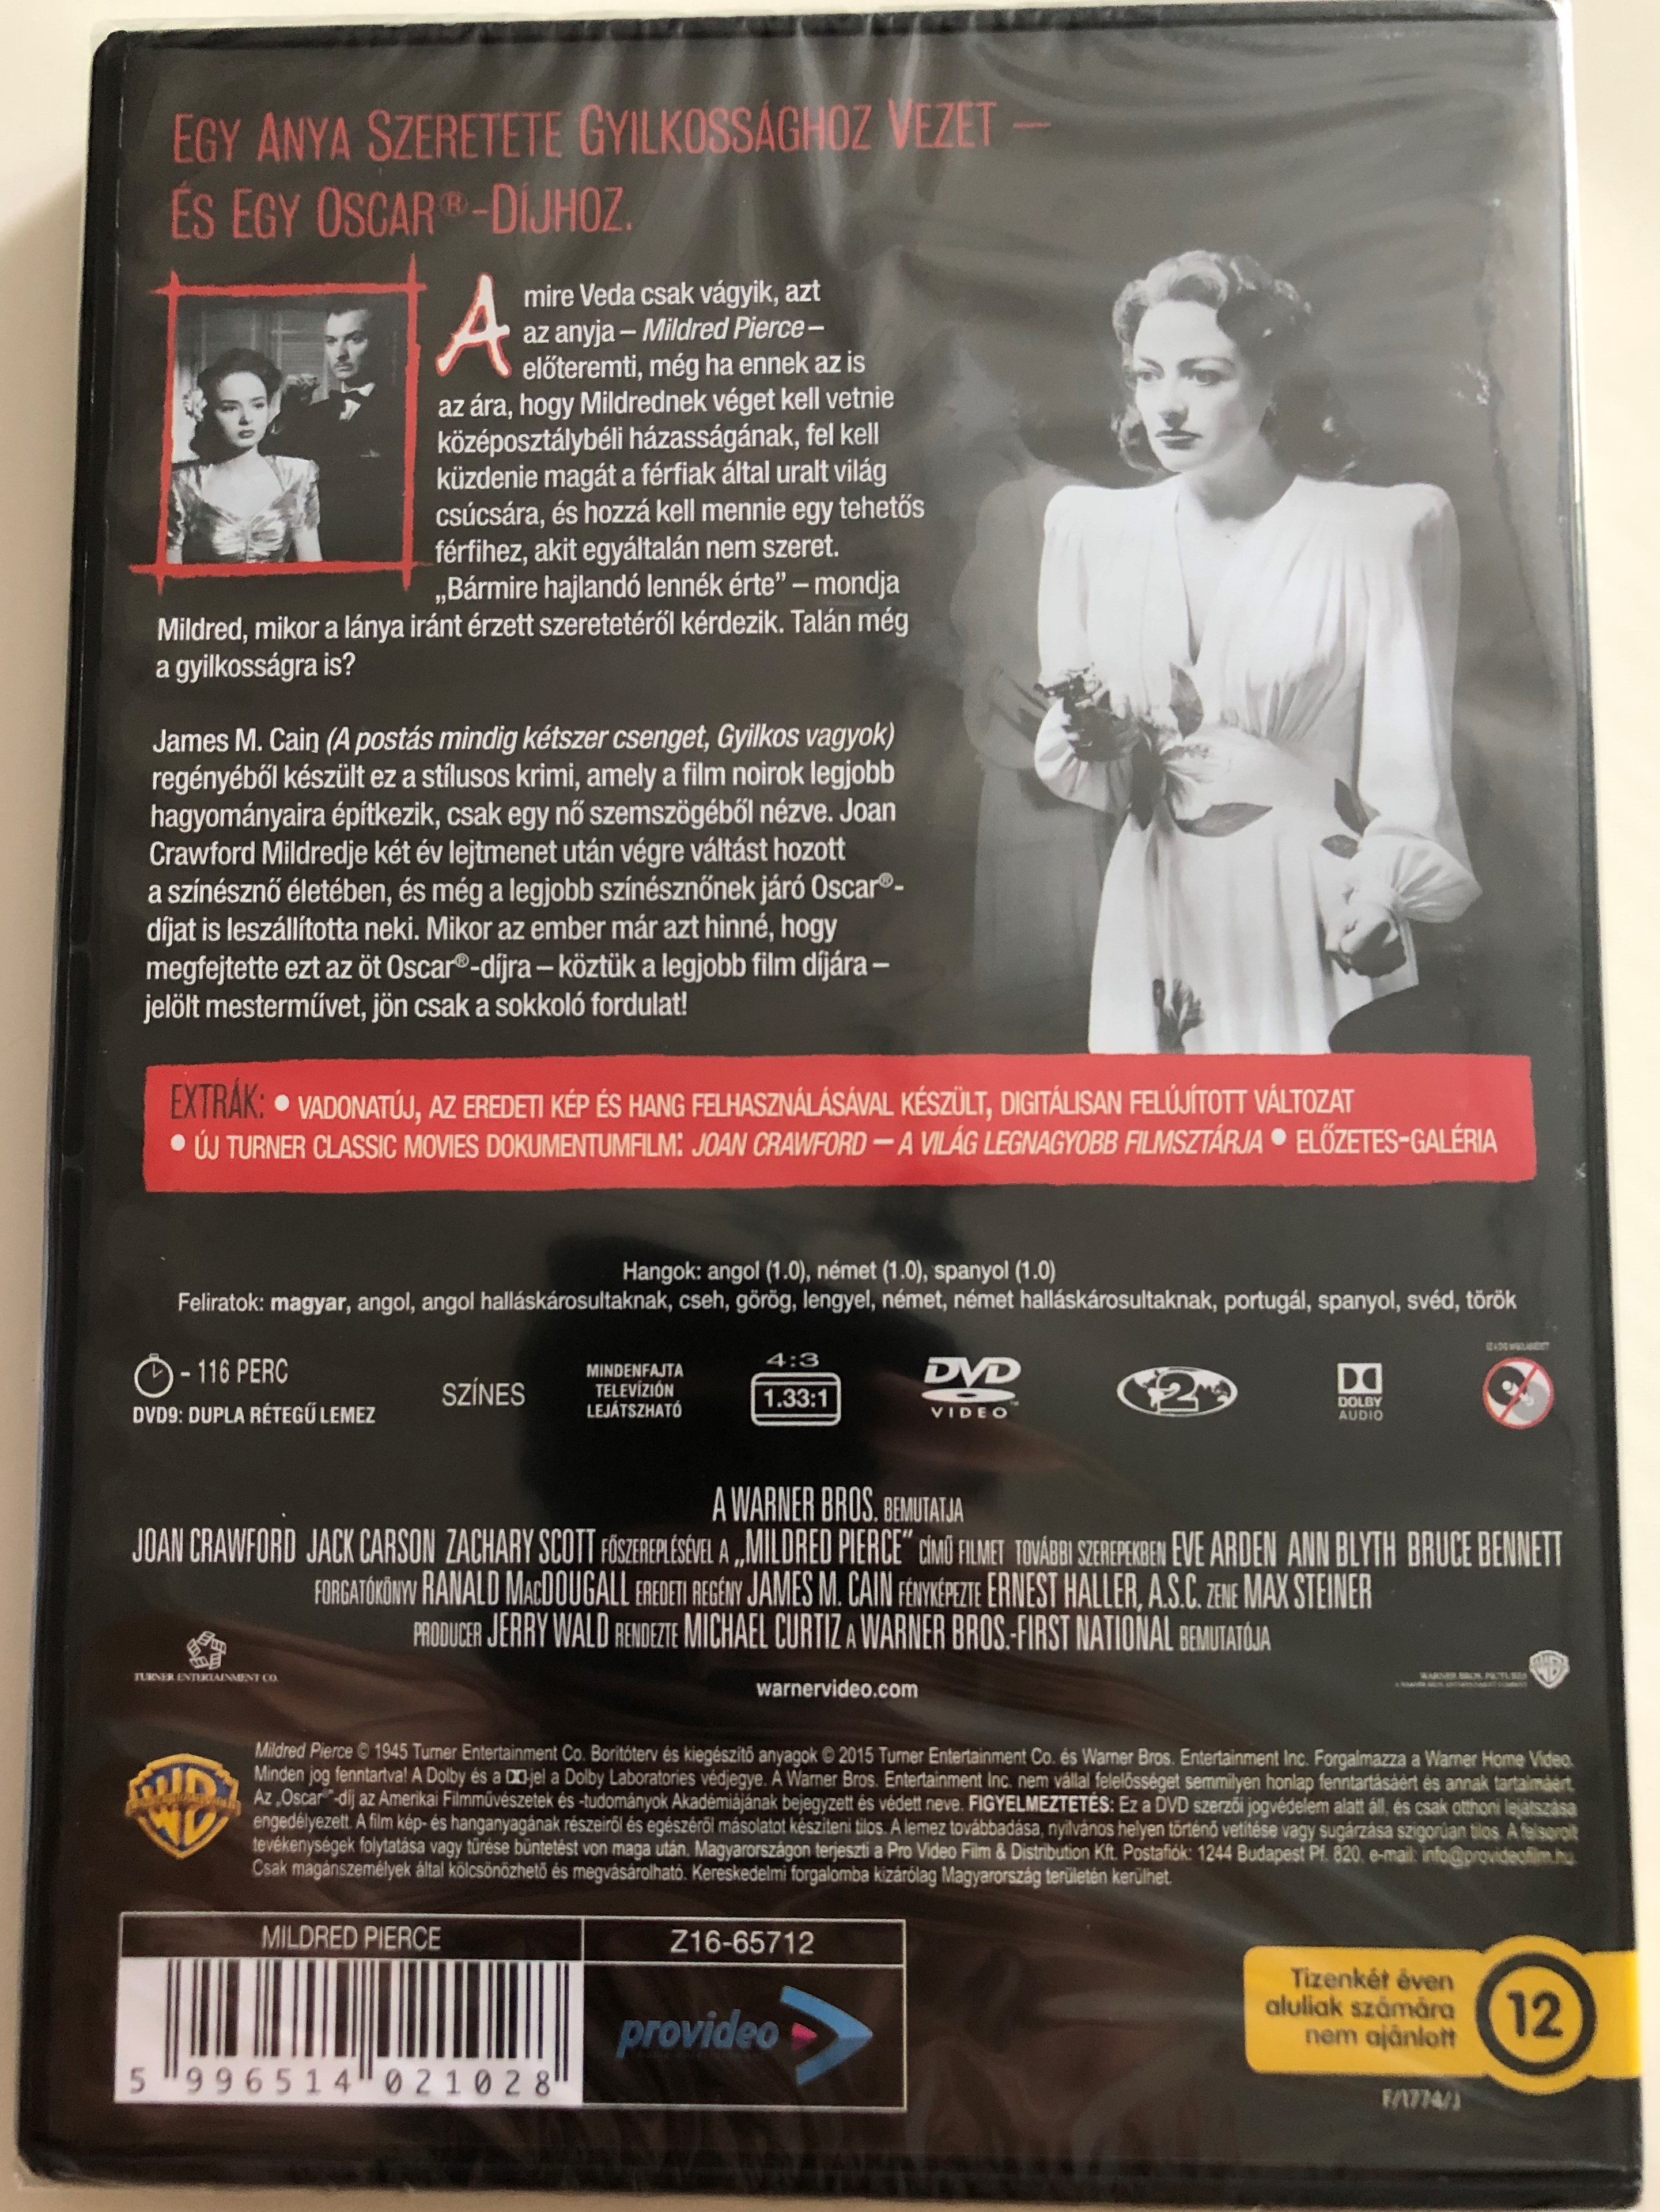 Mildred Pierce DVD 1945 / Directed by Michael Curtiz / Starring: Joan  Crawford, Jack Carson, Zachary Scott / American film noir crime-drama -  bibleinmylanguage